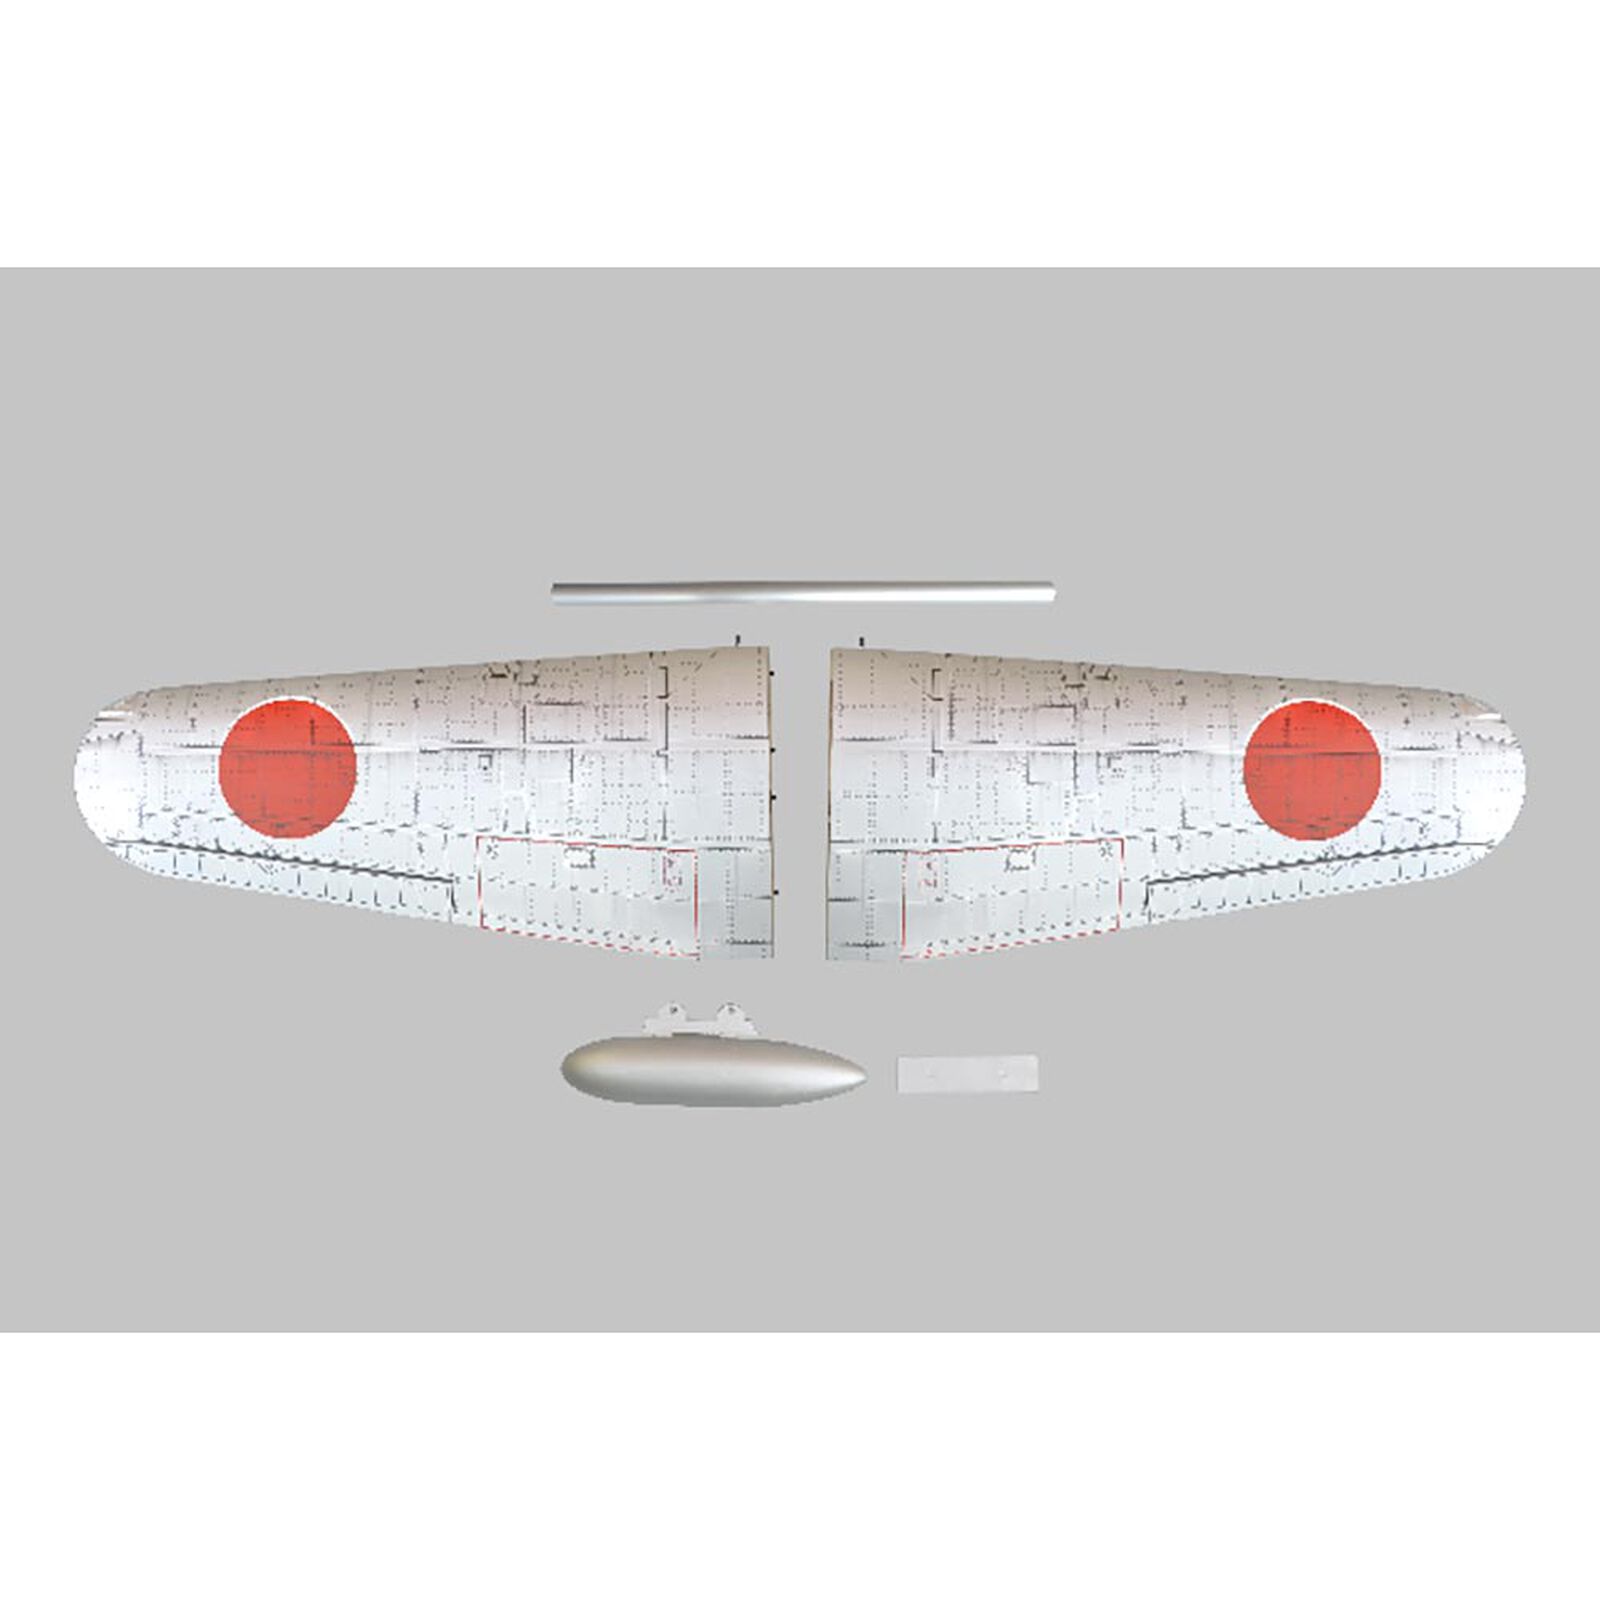 Wing Set: Zero A6M 1.20 ARF 67.7"